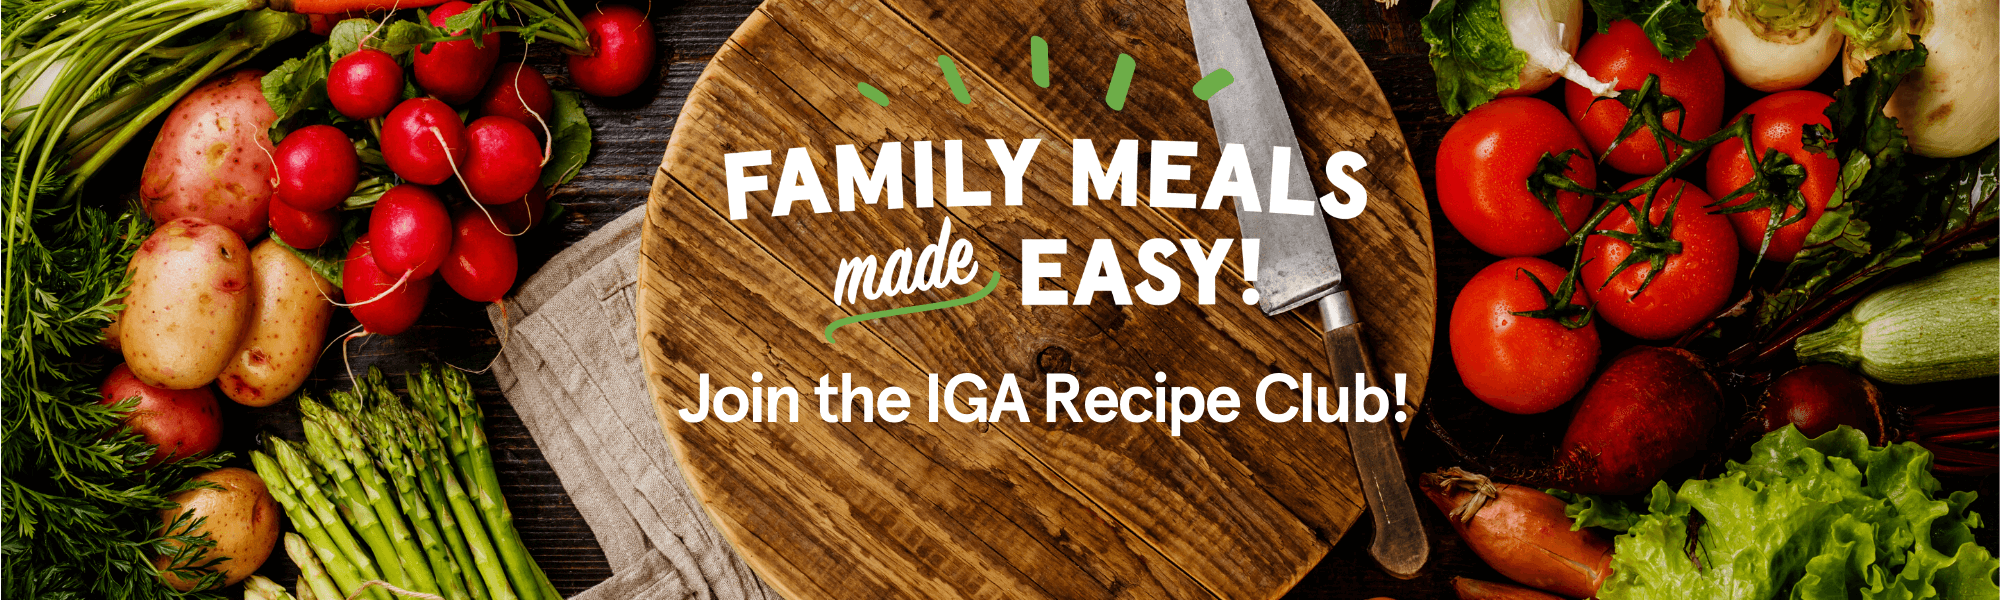 Join the IGA Recipe Club!